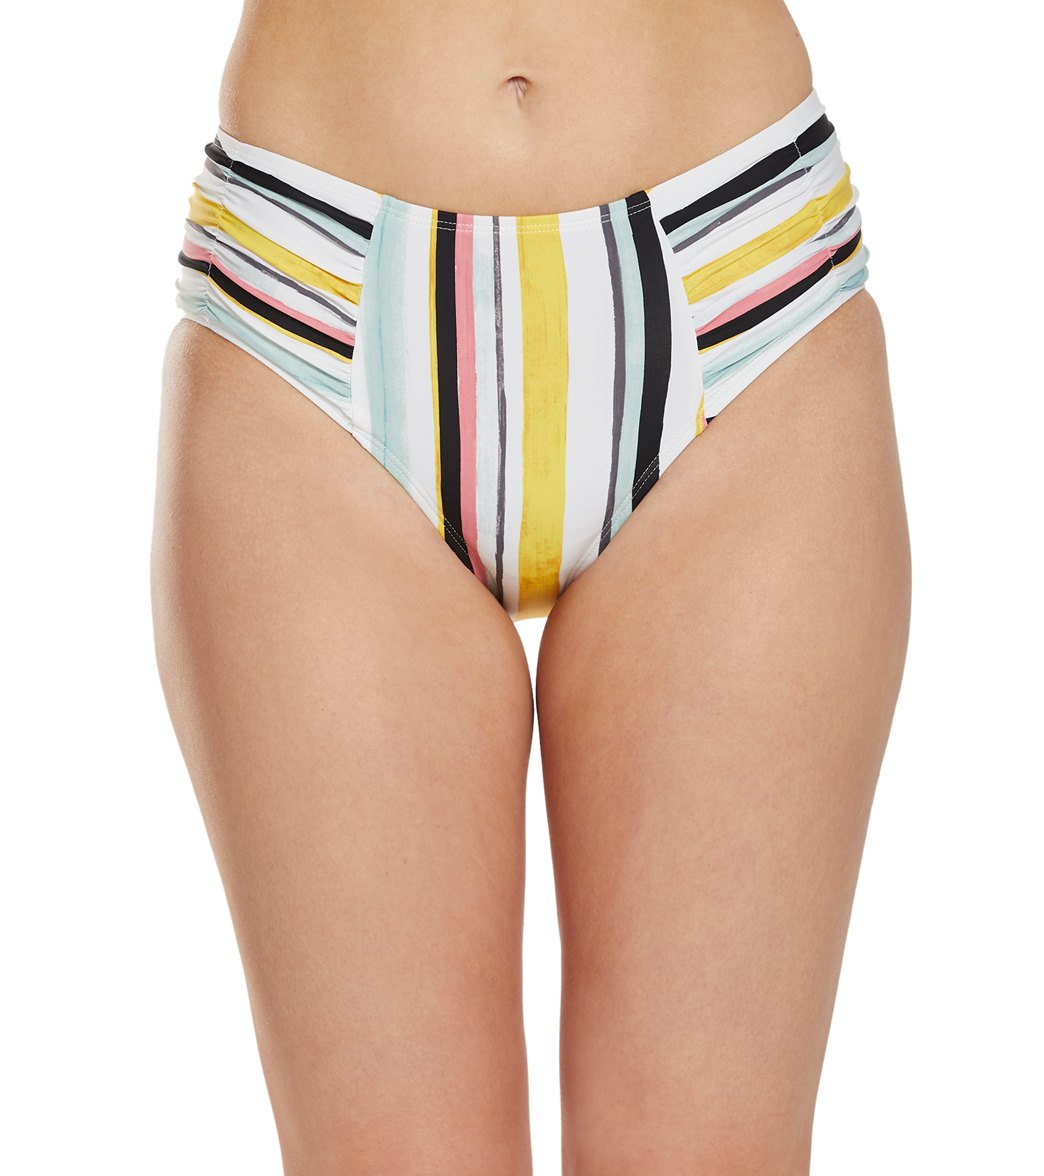 Skye Maya Alessia Bikini Bottom - Black Large - Swimoutlet.com